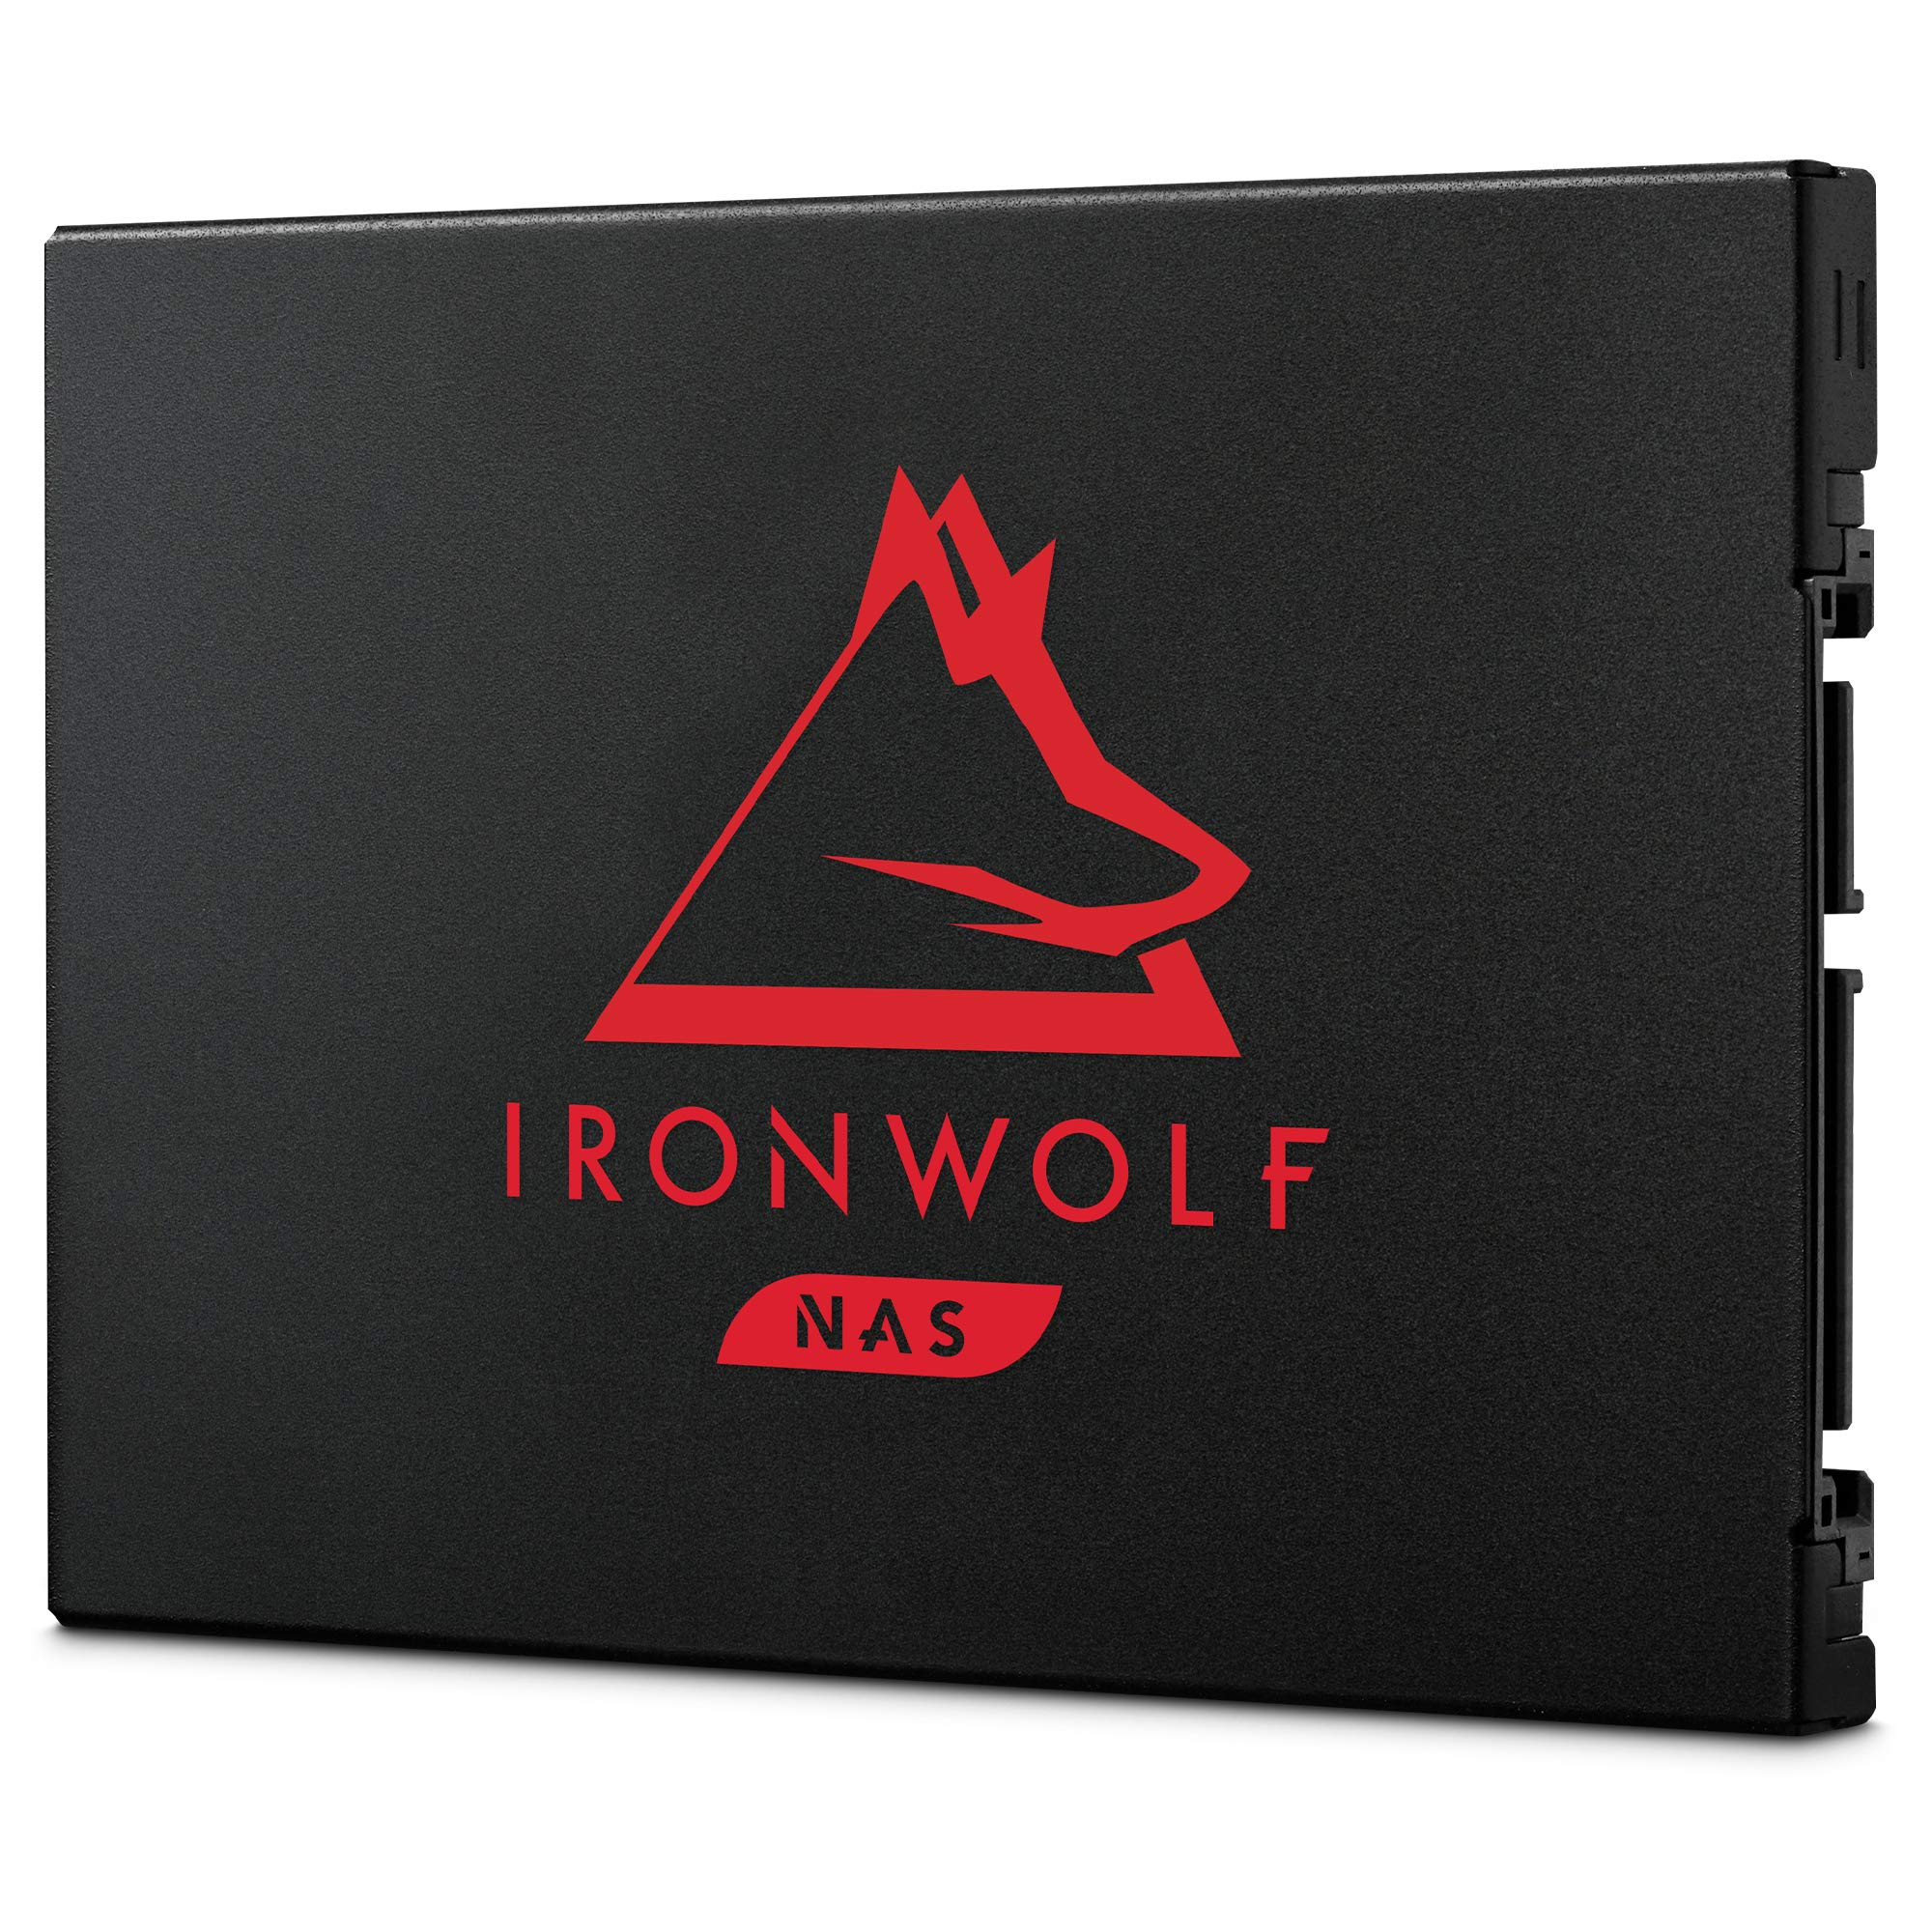 IRONWOLF 125 SSD 500GB RETAIL